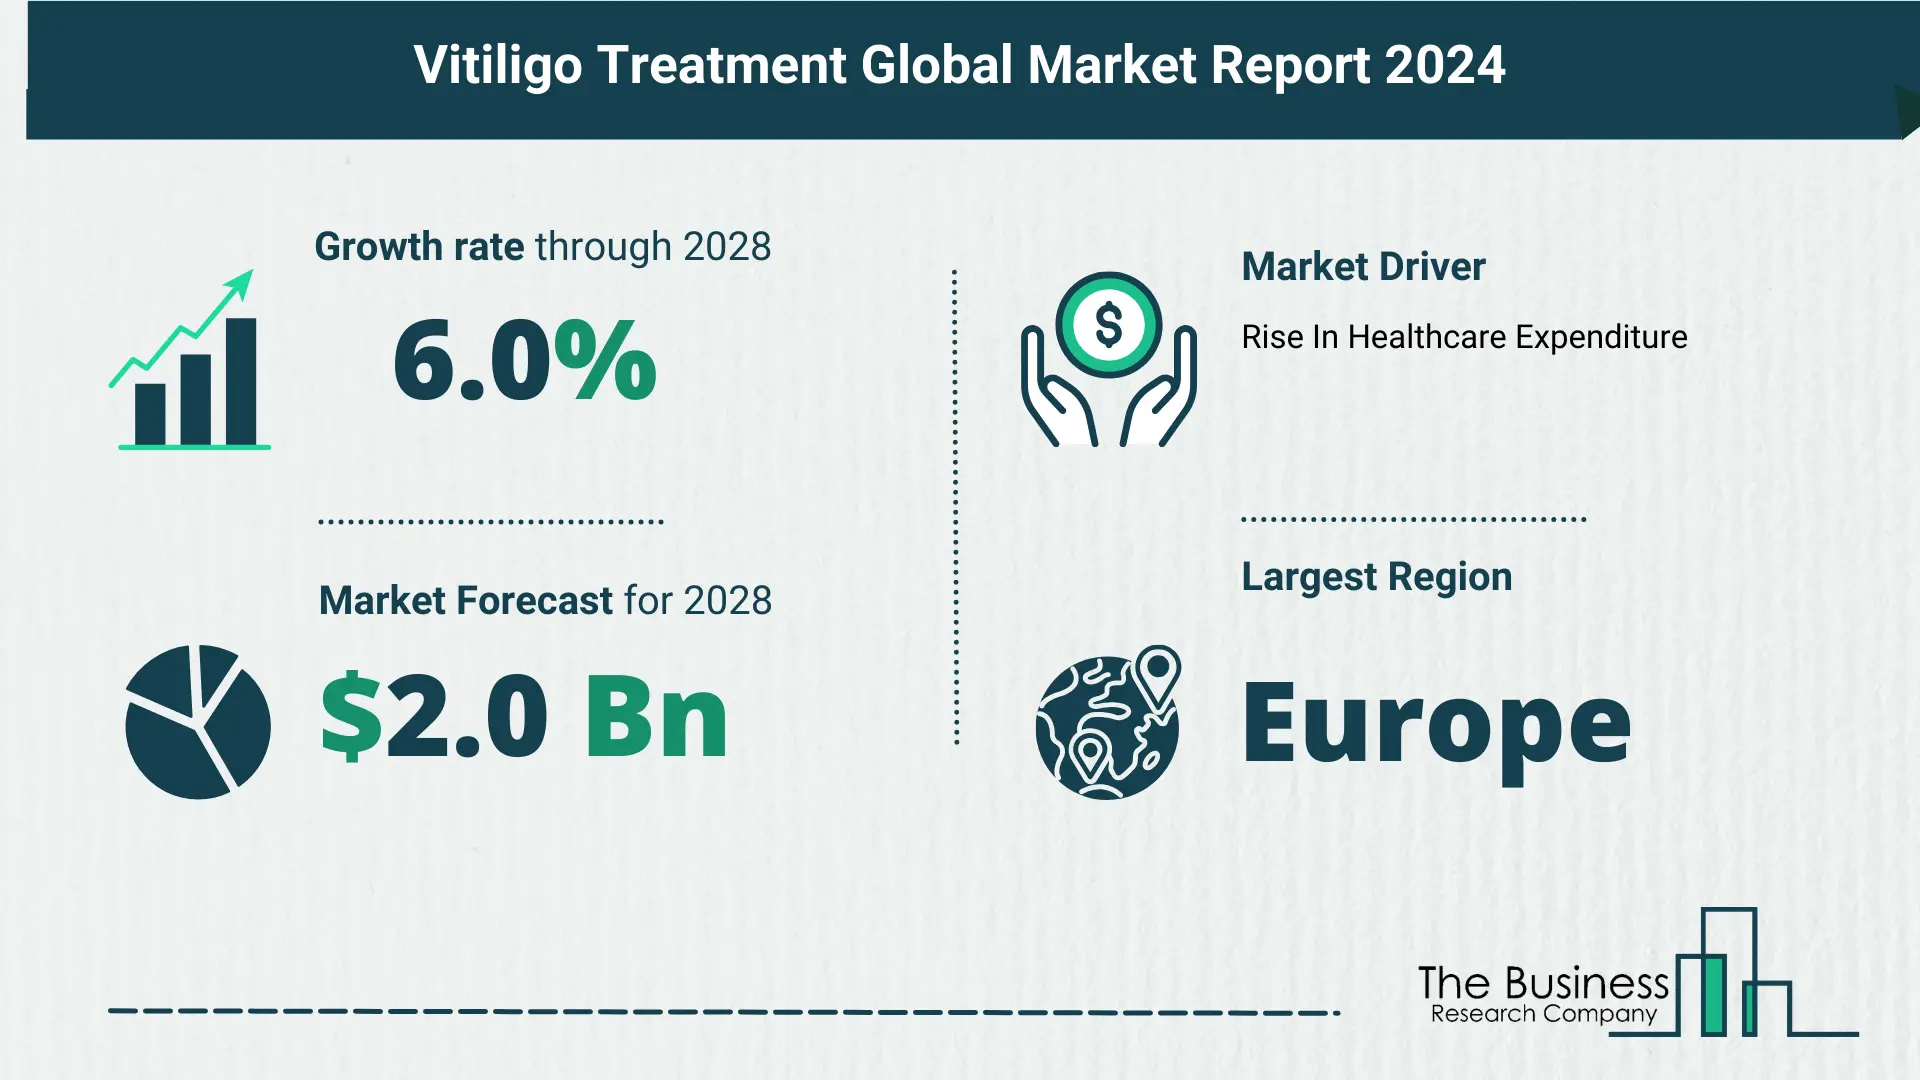 How Is The Vitiligo Treatment Market Expected To Grow Through 2024-2033